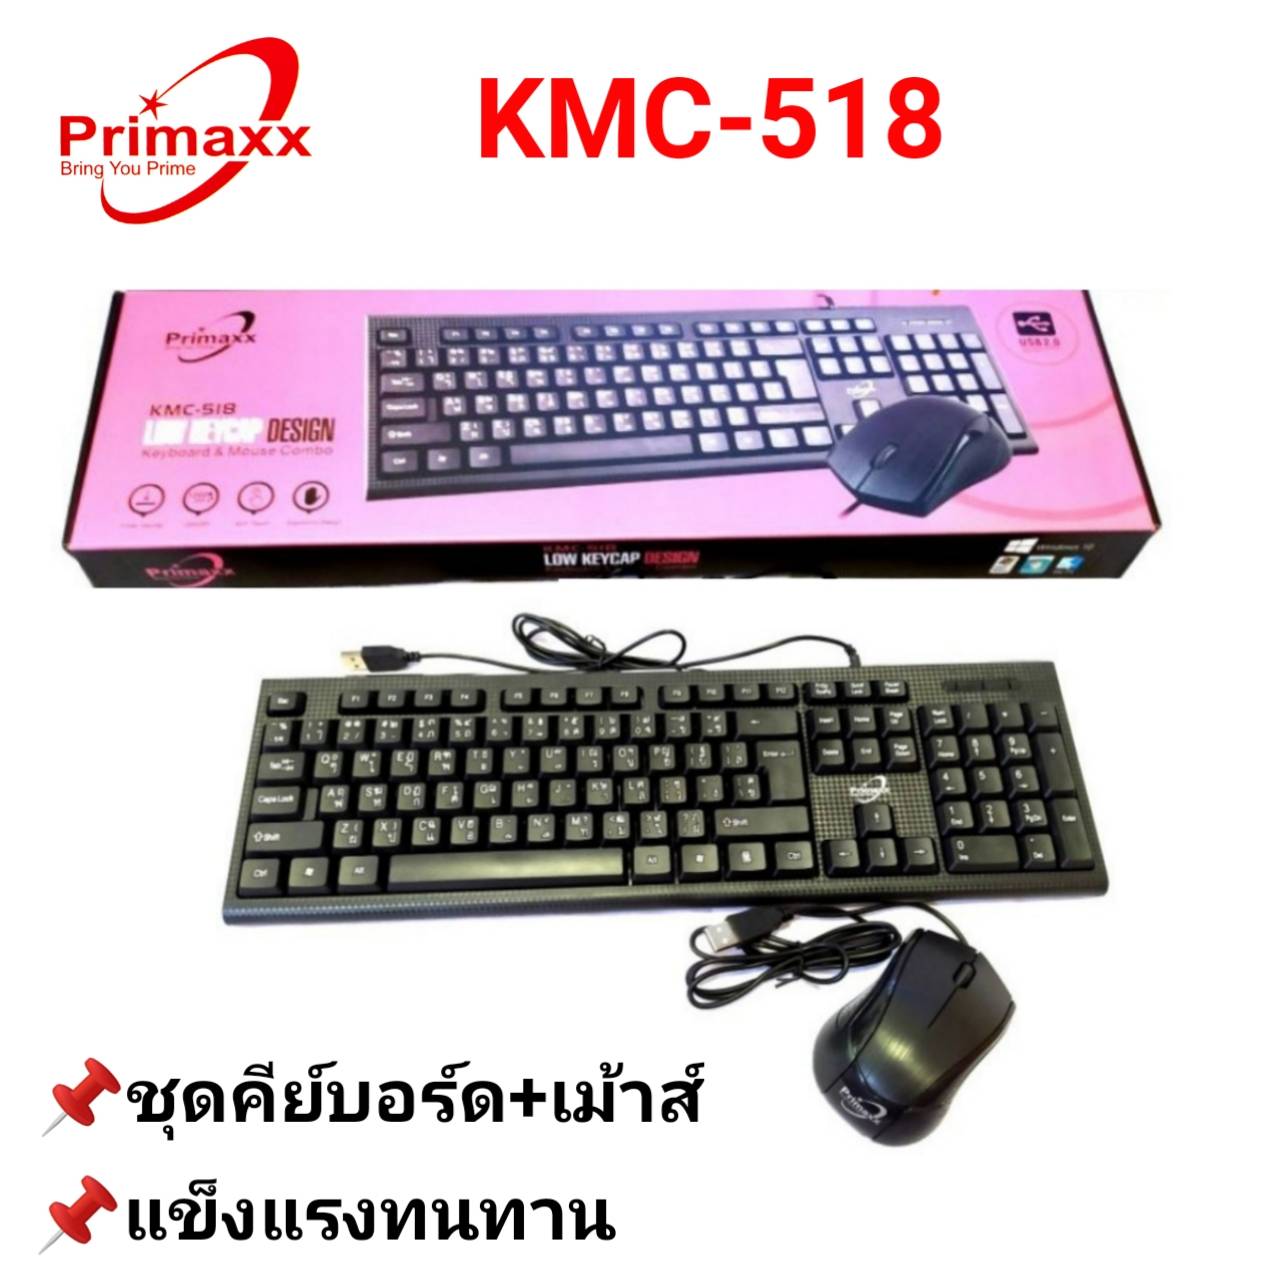 Primaxx KMC-518 Waterproof Keyboard+Mouse USB ชุดคีย์บอร์ด+เมาส์ (สีดำ)